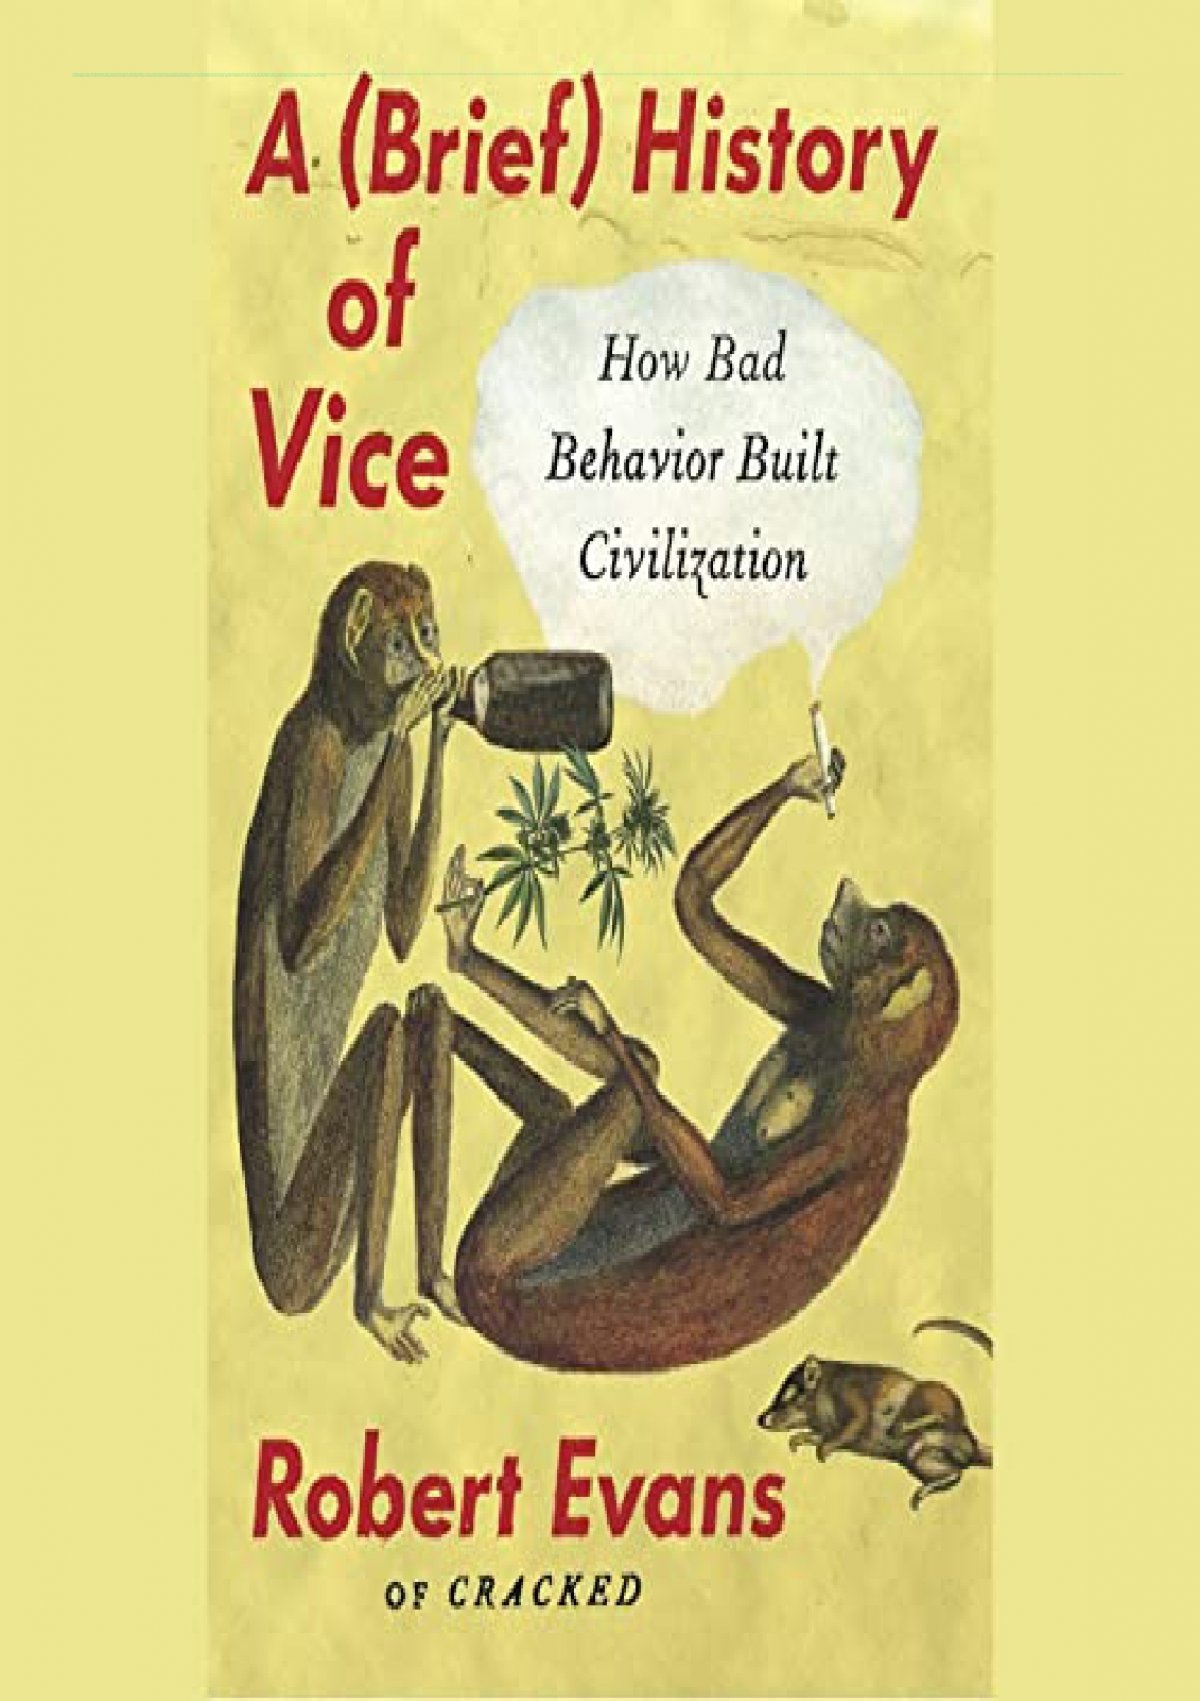 Download E Book A Brief History Of Vice How Bad Behavior Built Civilization 2741